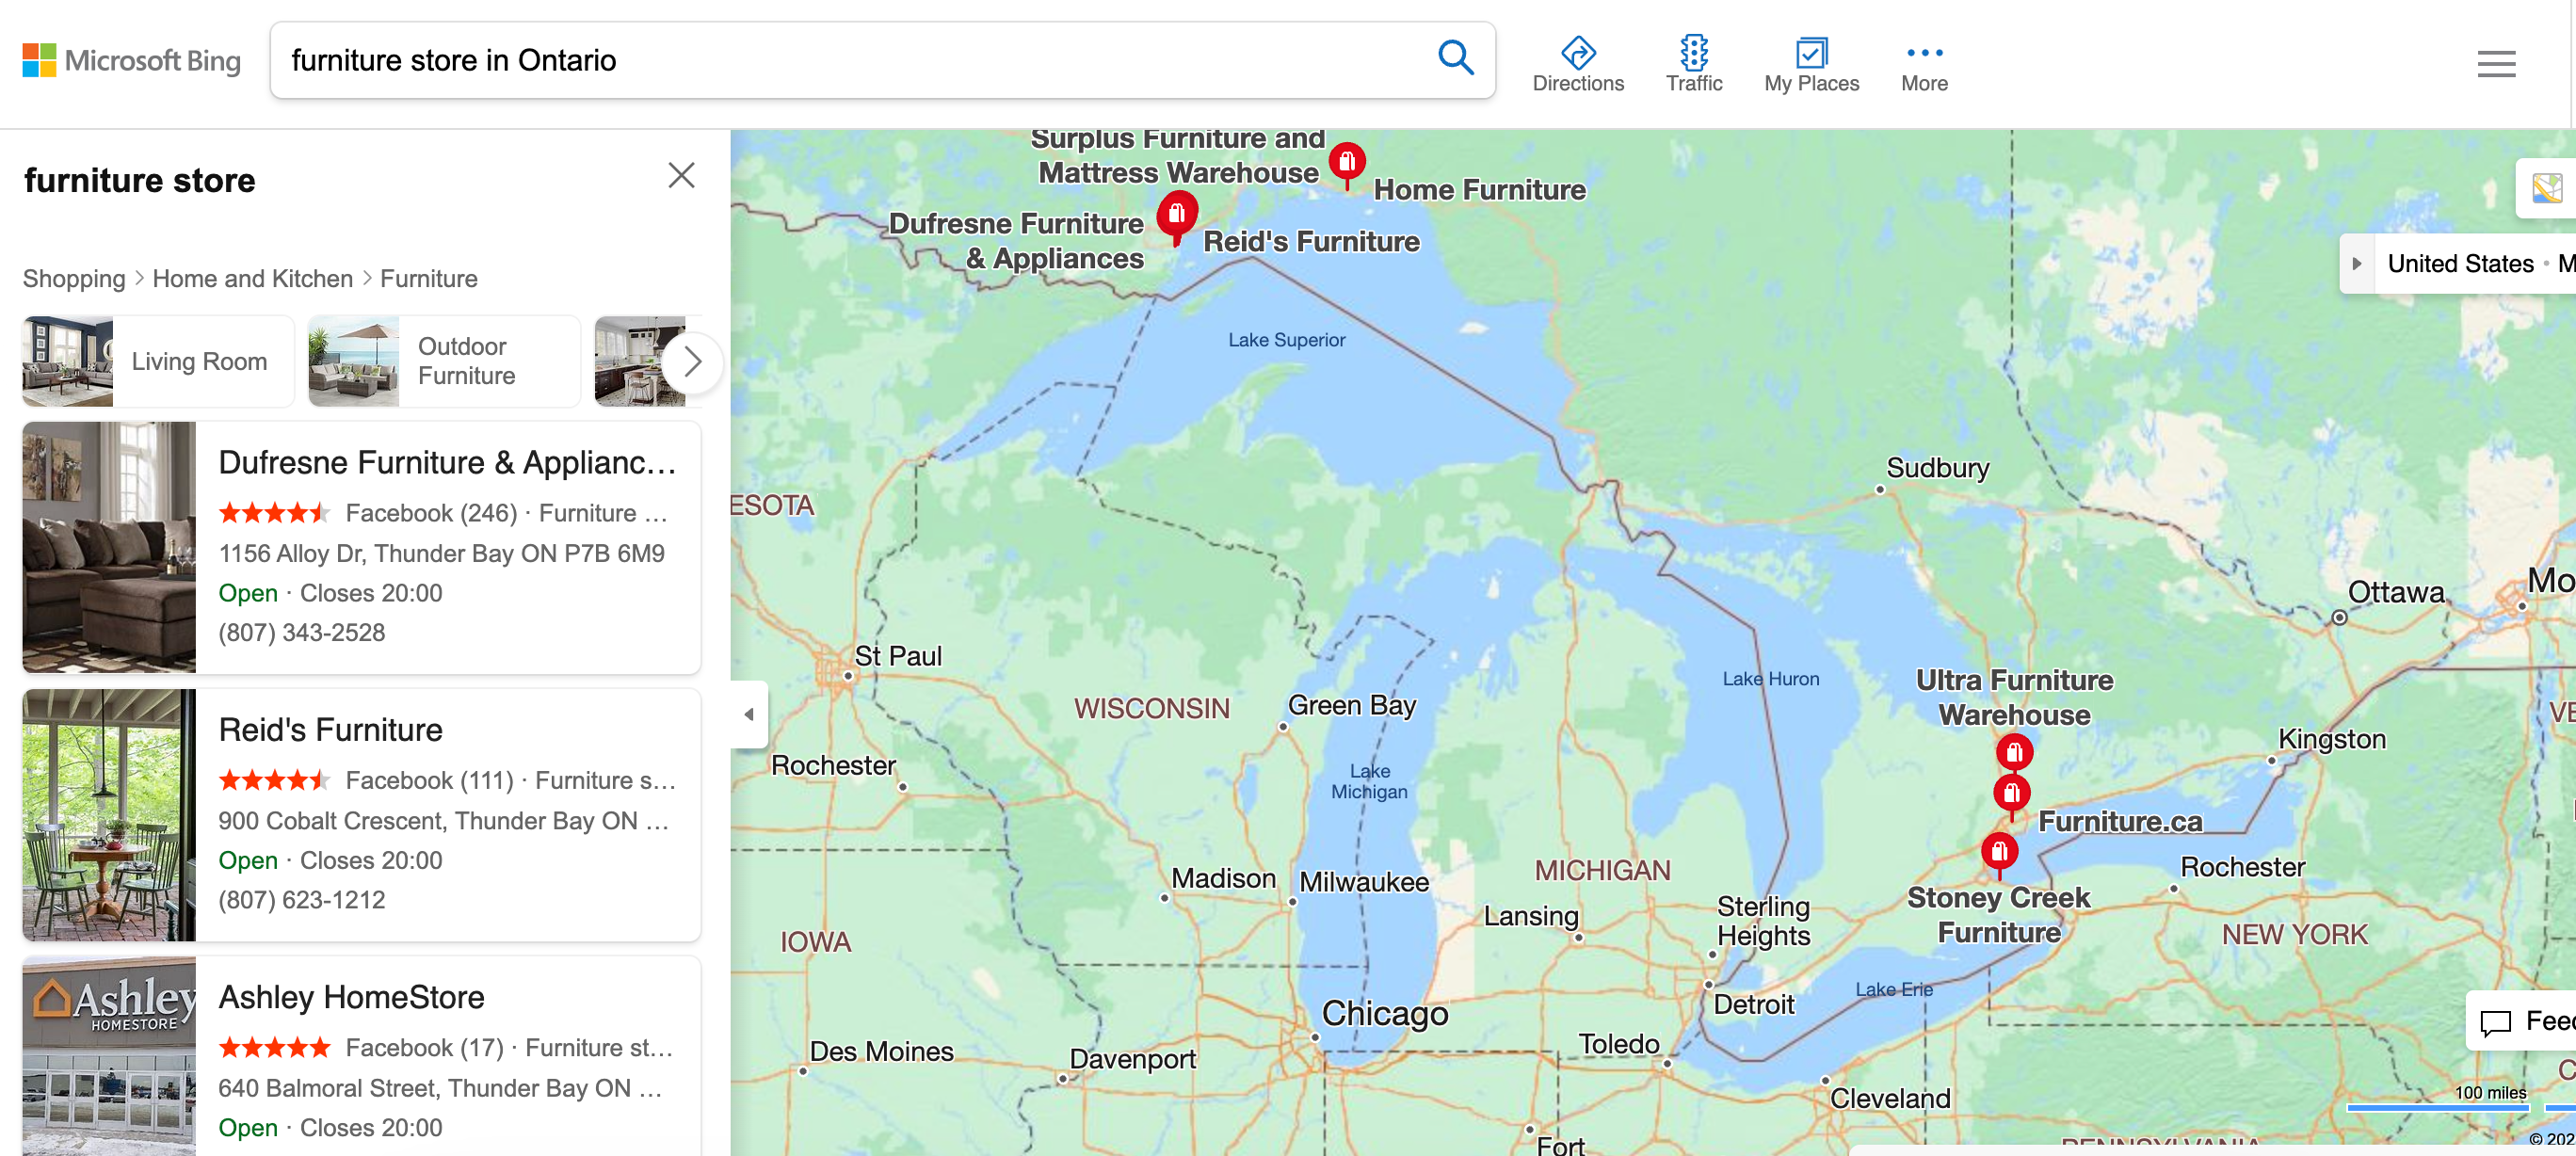 furniture store in Ontario in Bing map